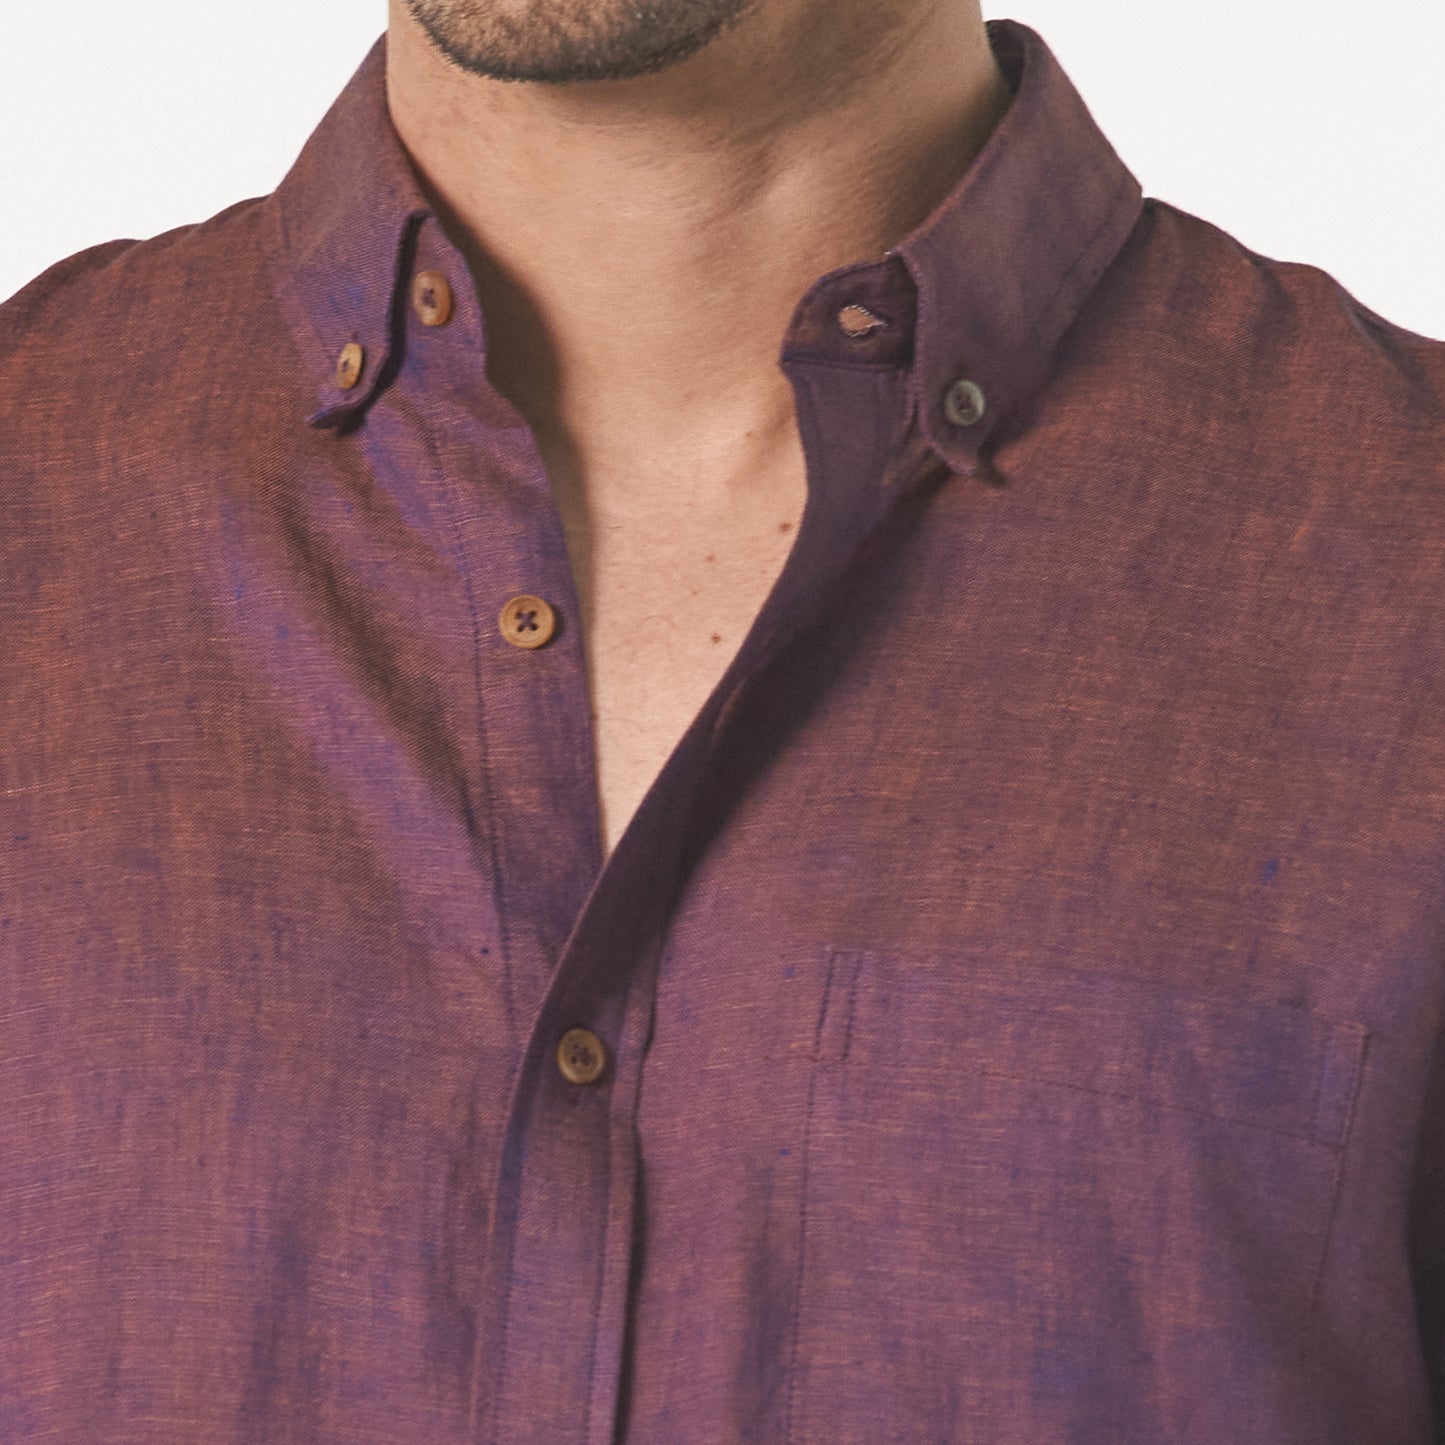 Camisa manga larga 100% lino color morado